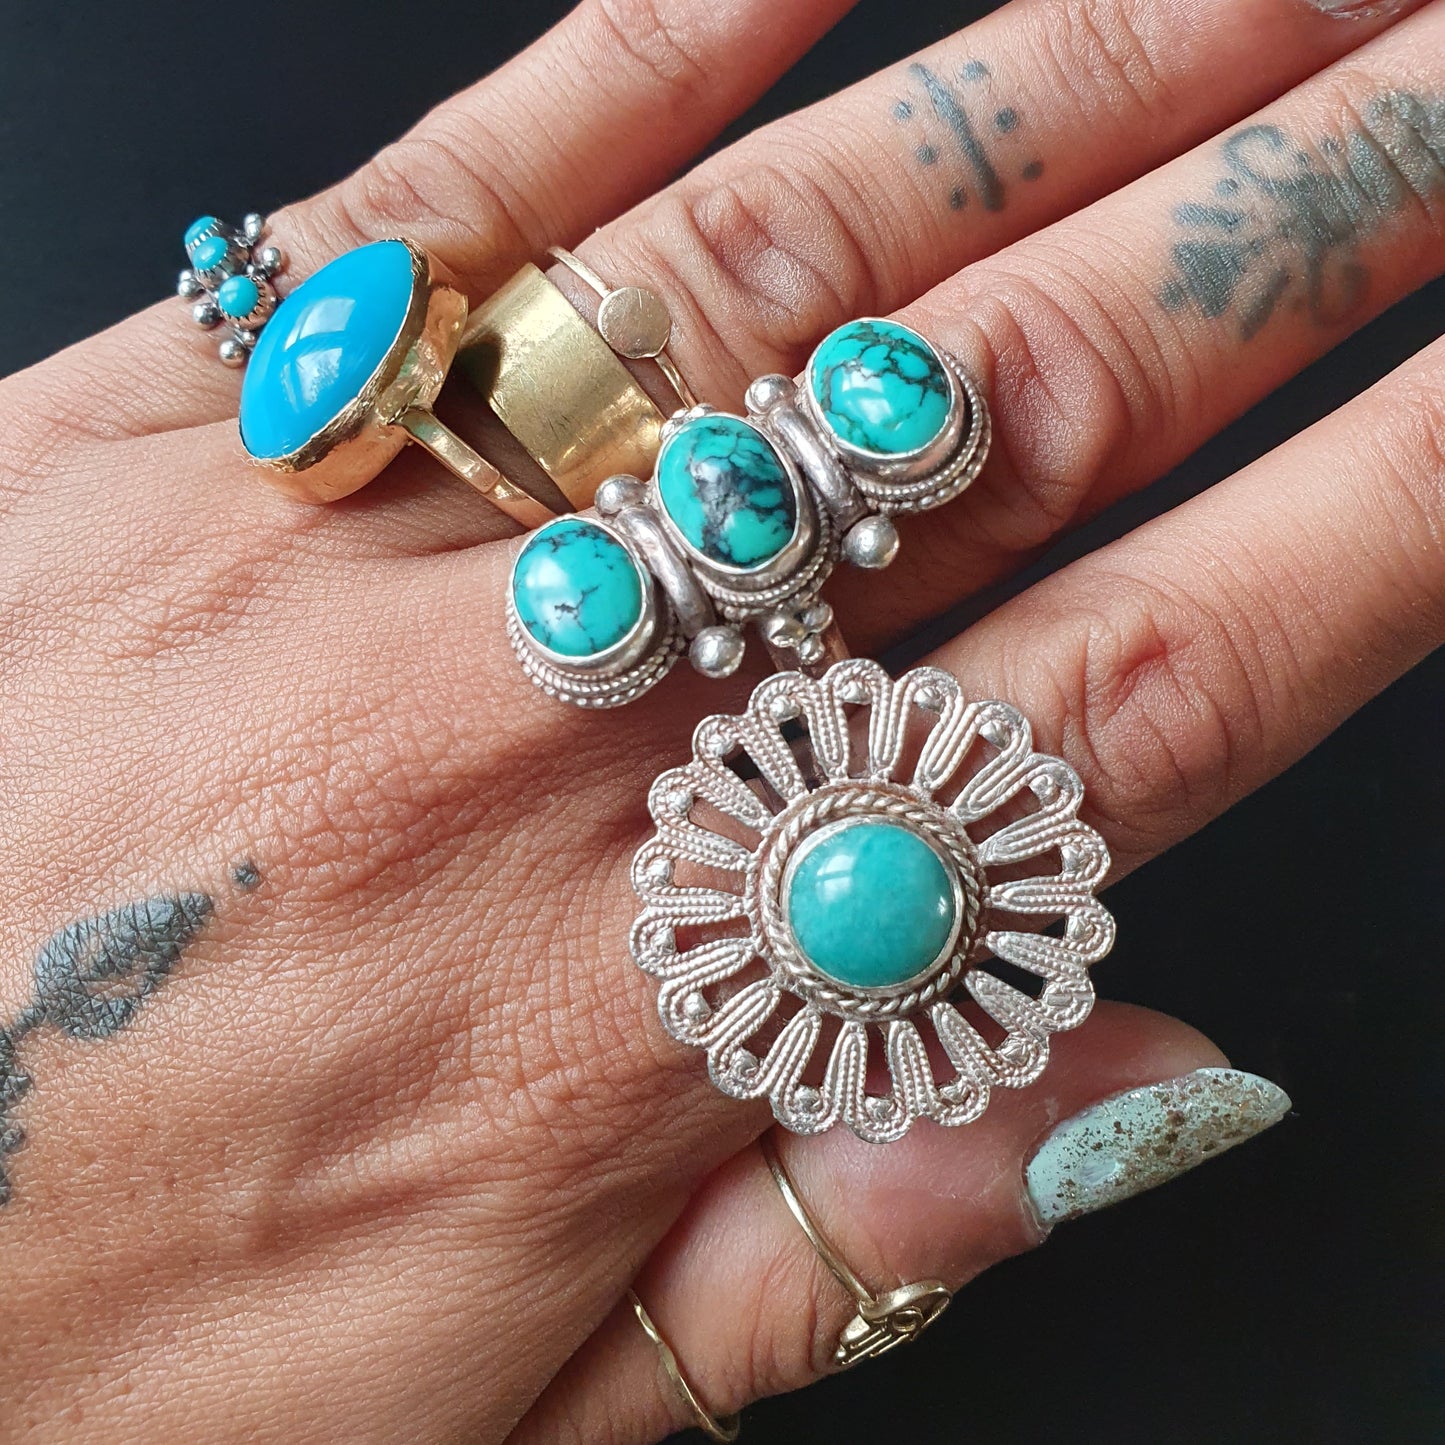 Artsy ring floral design turquoise gemstone